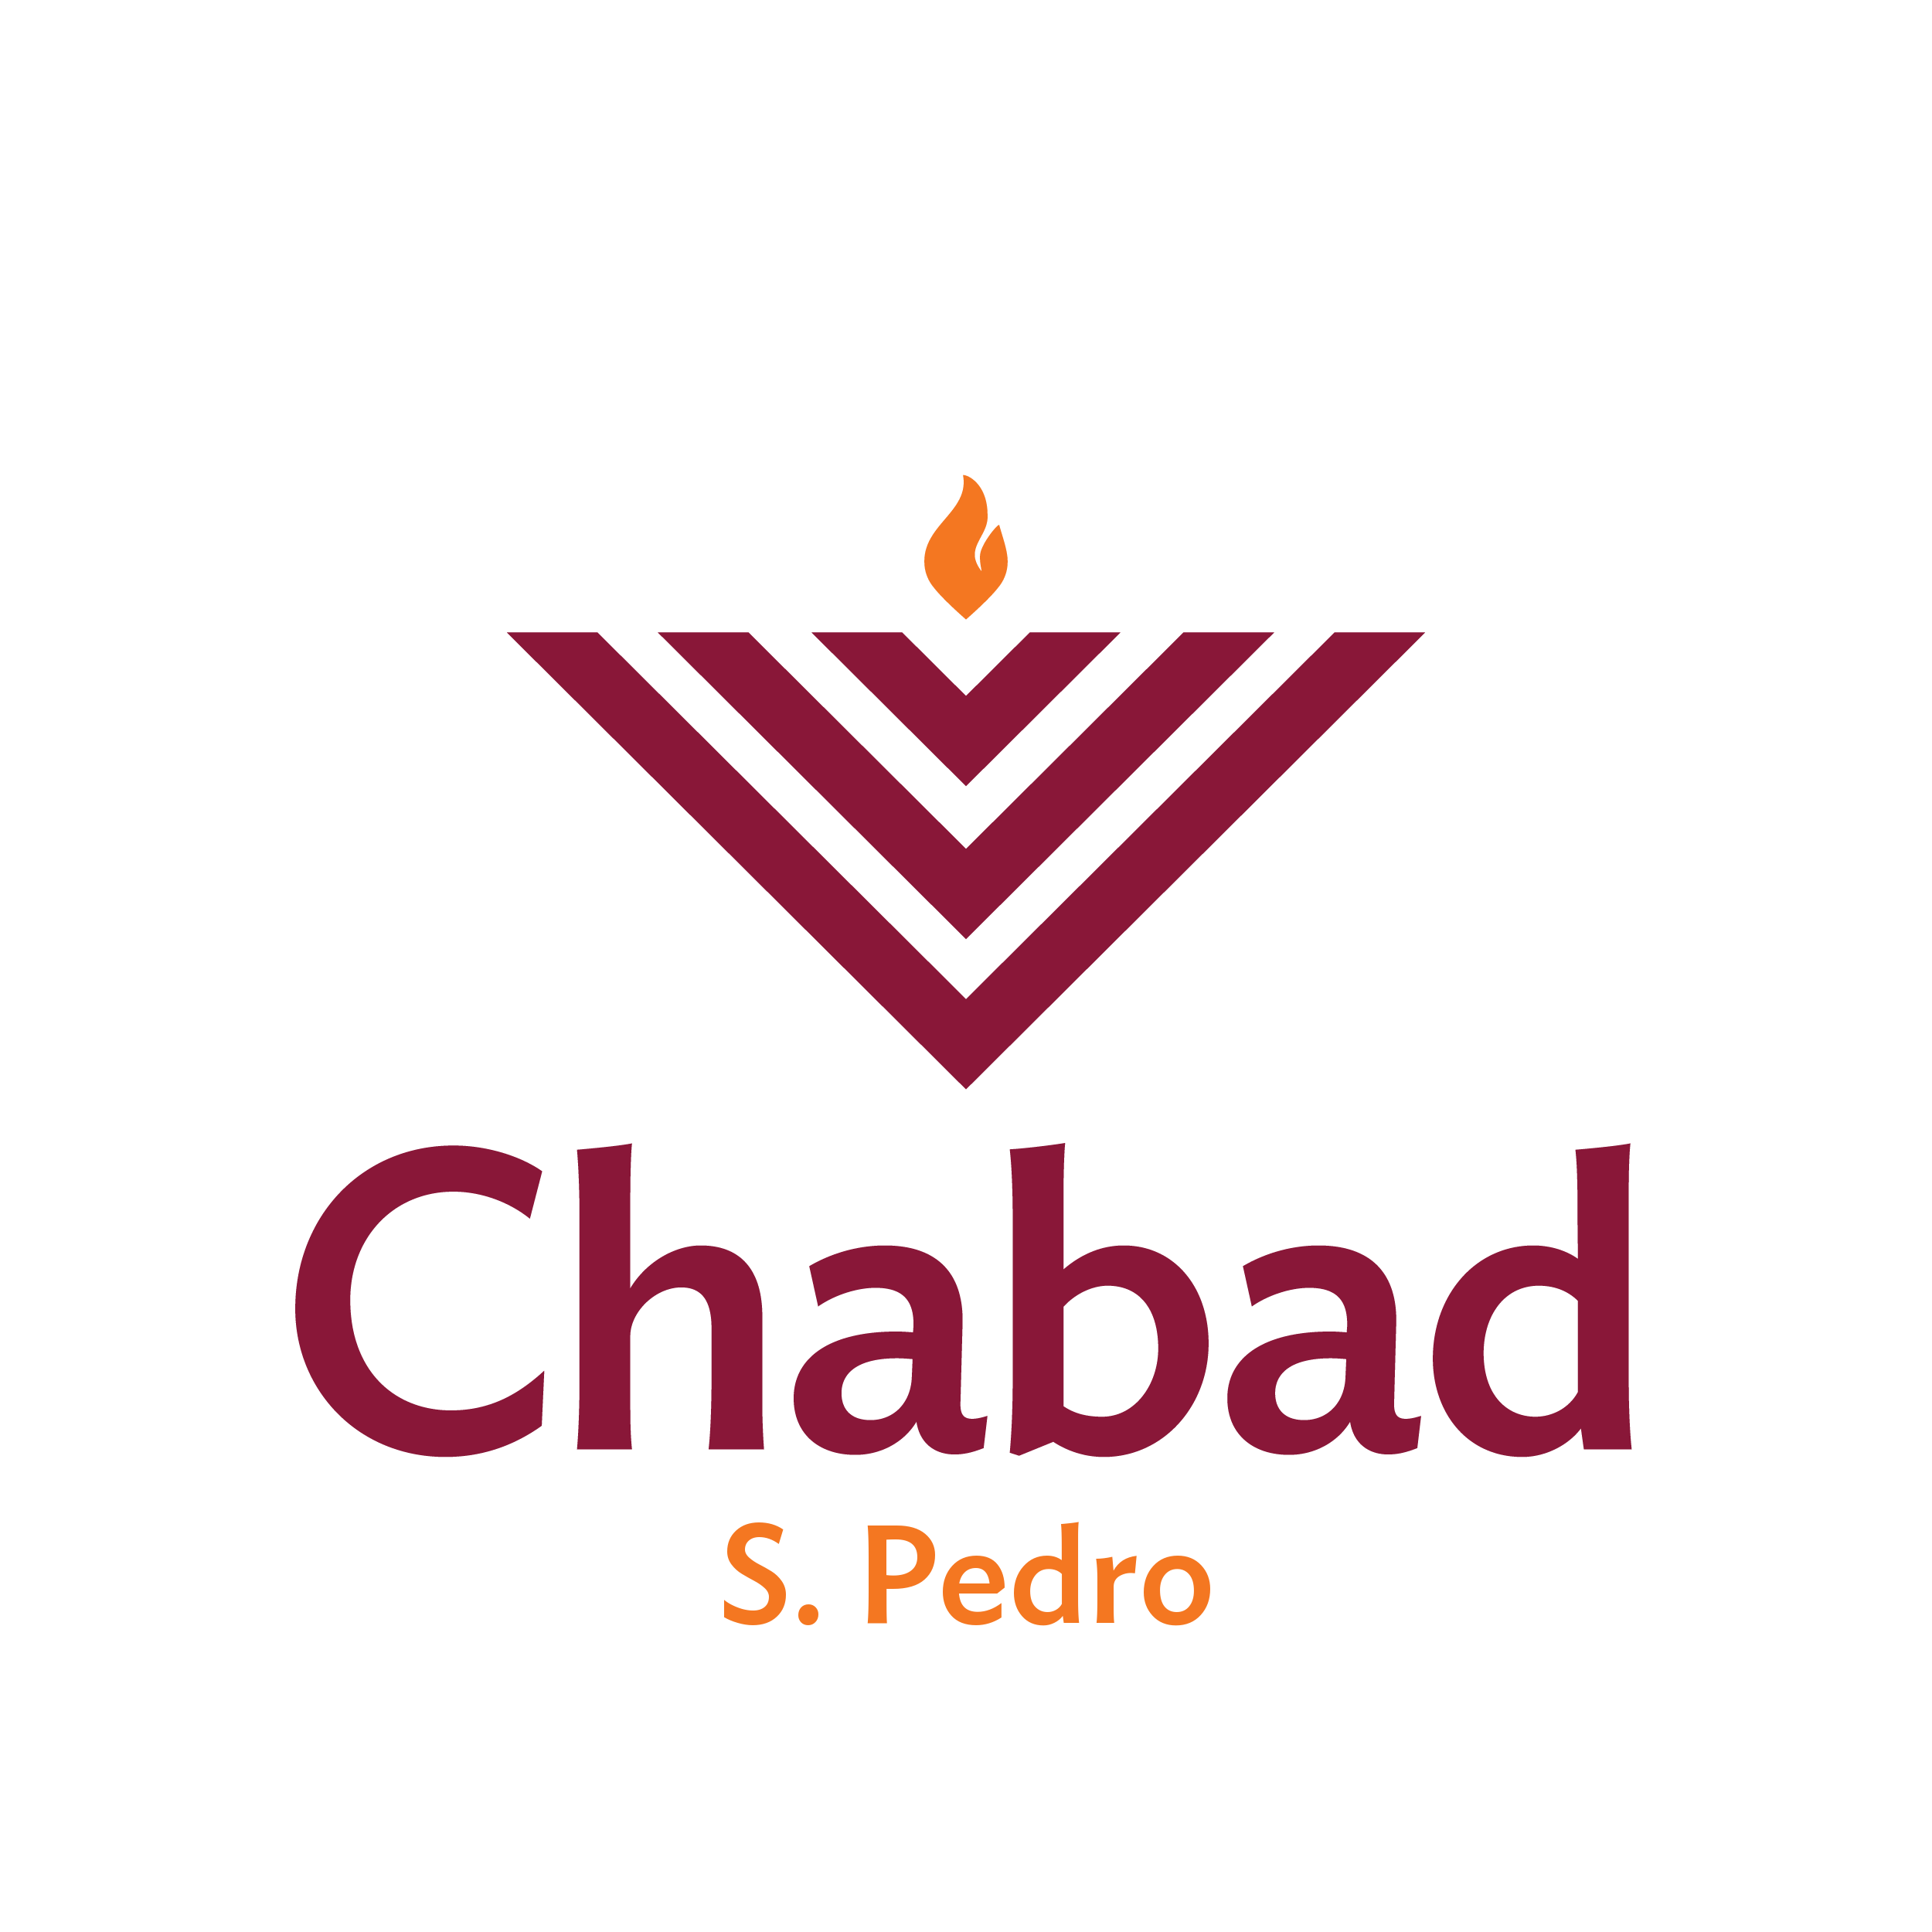 Chabad S. Pedro Jewish Center logo